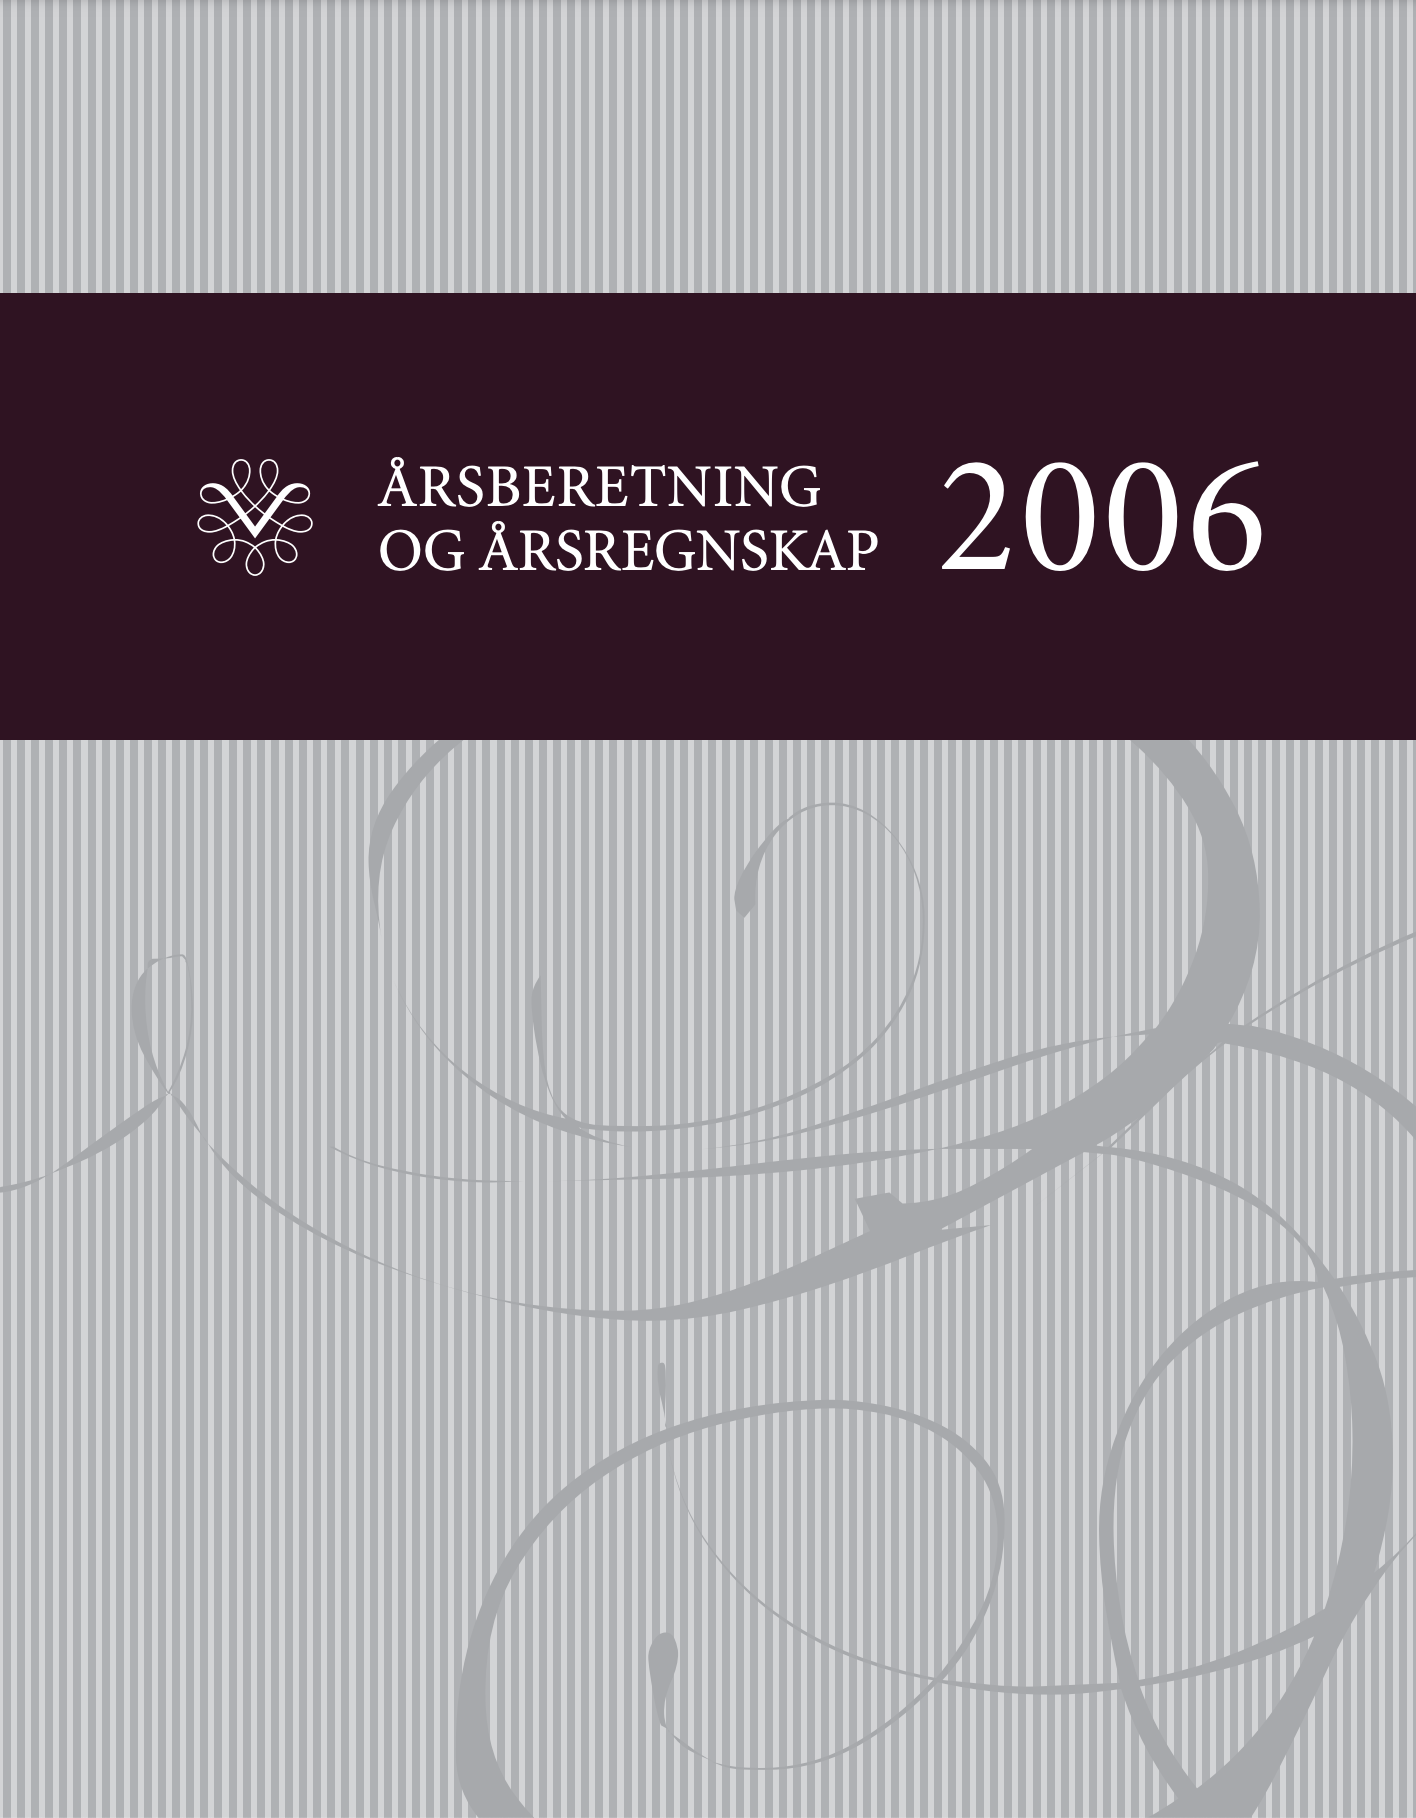 Årsberetning og årsregnskap 2006